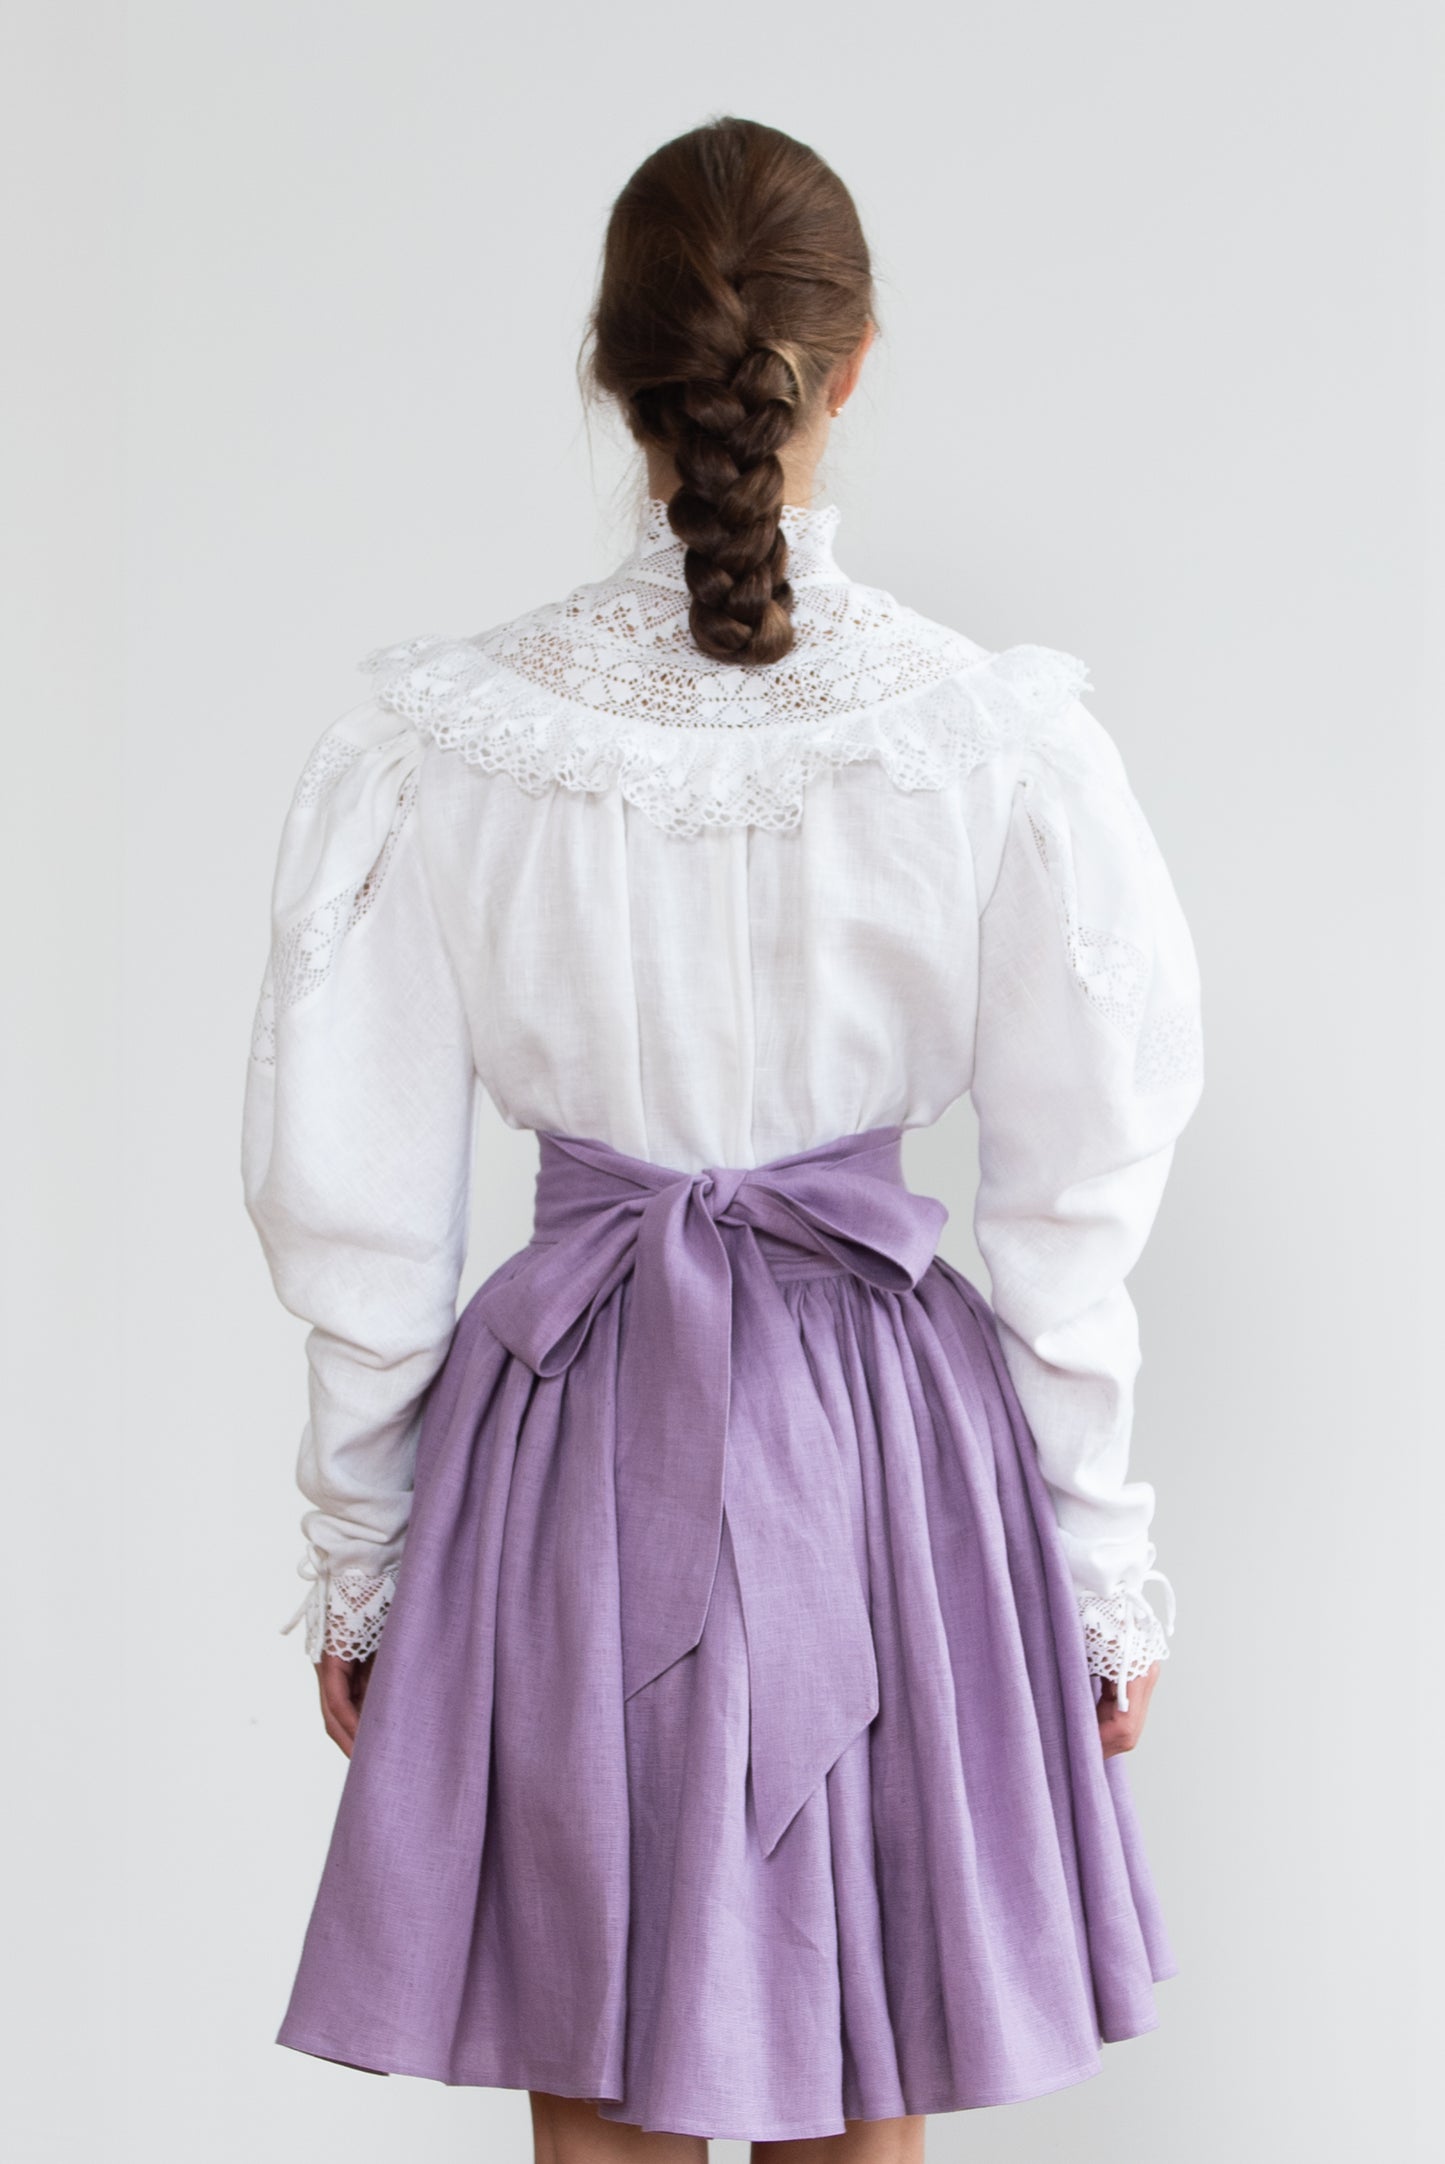 Alice in Wonderland Full Circle Wrap Linen Skirt in Lilac